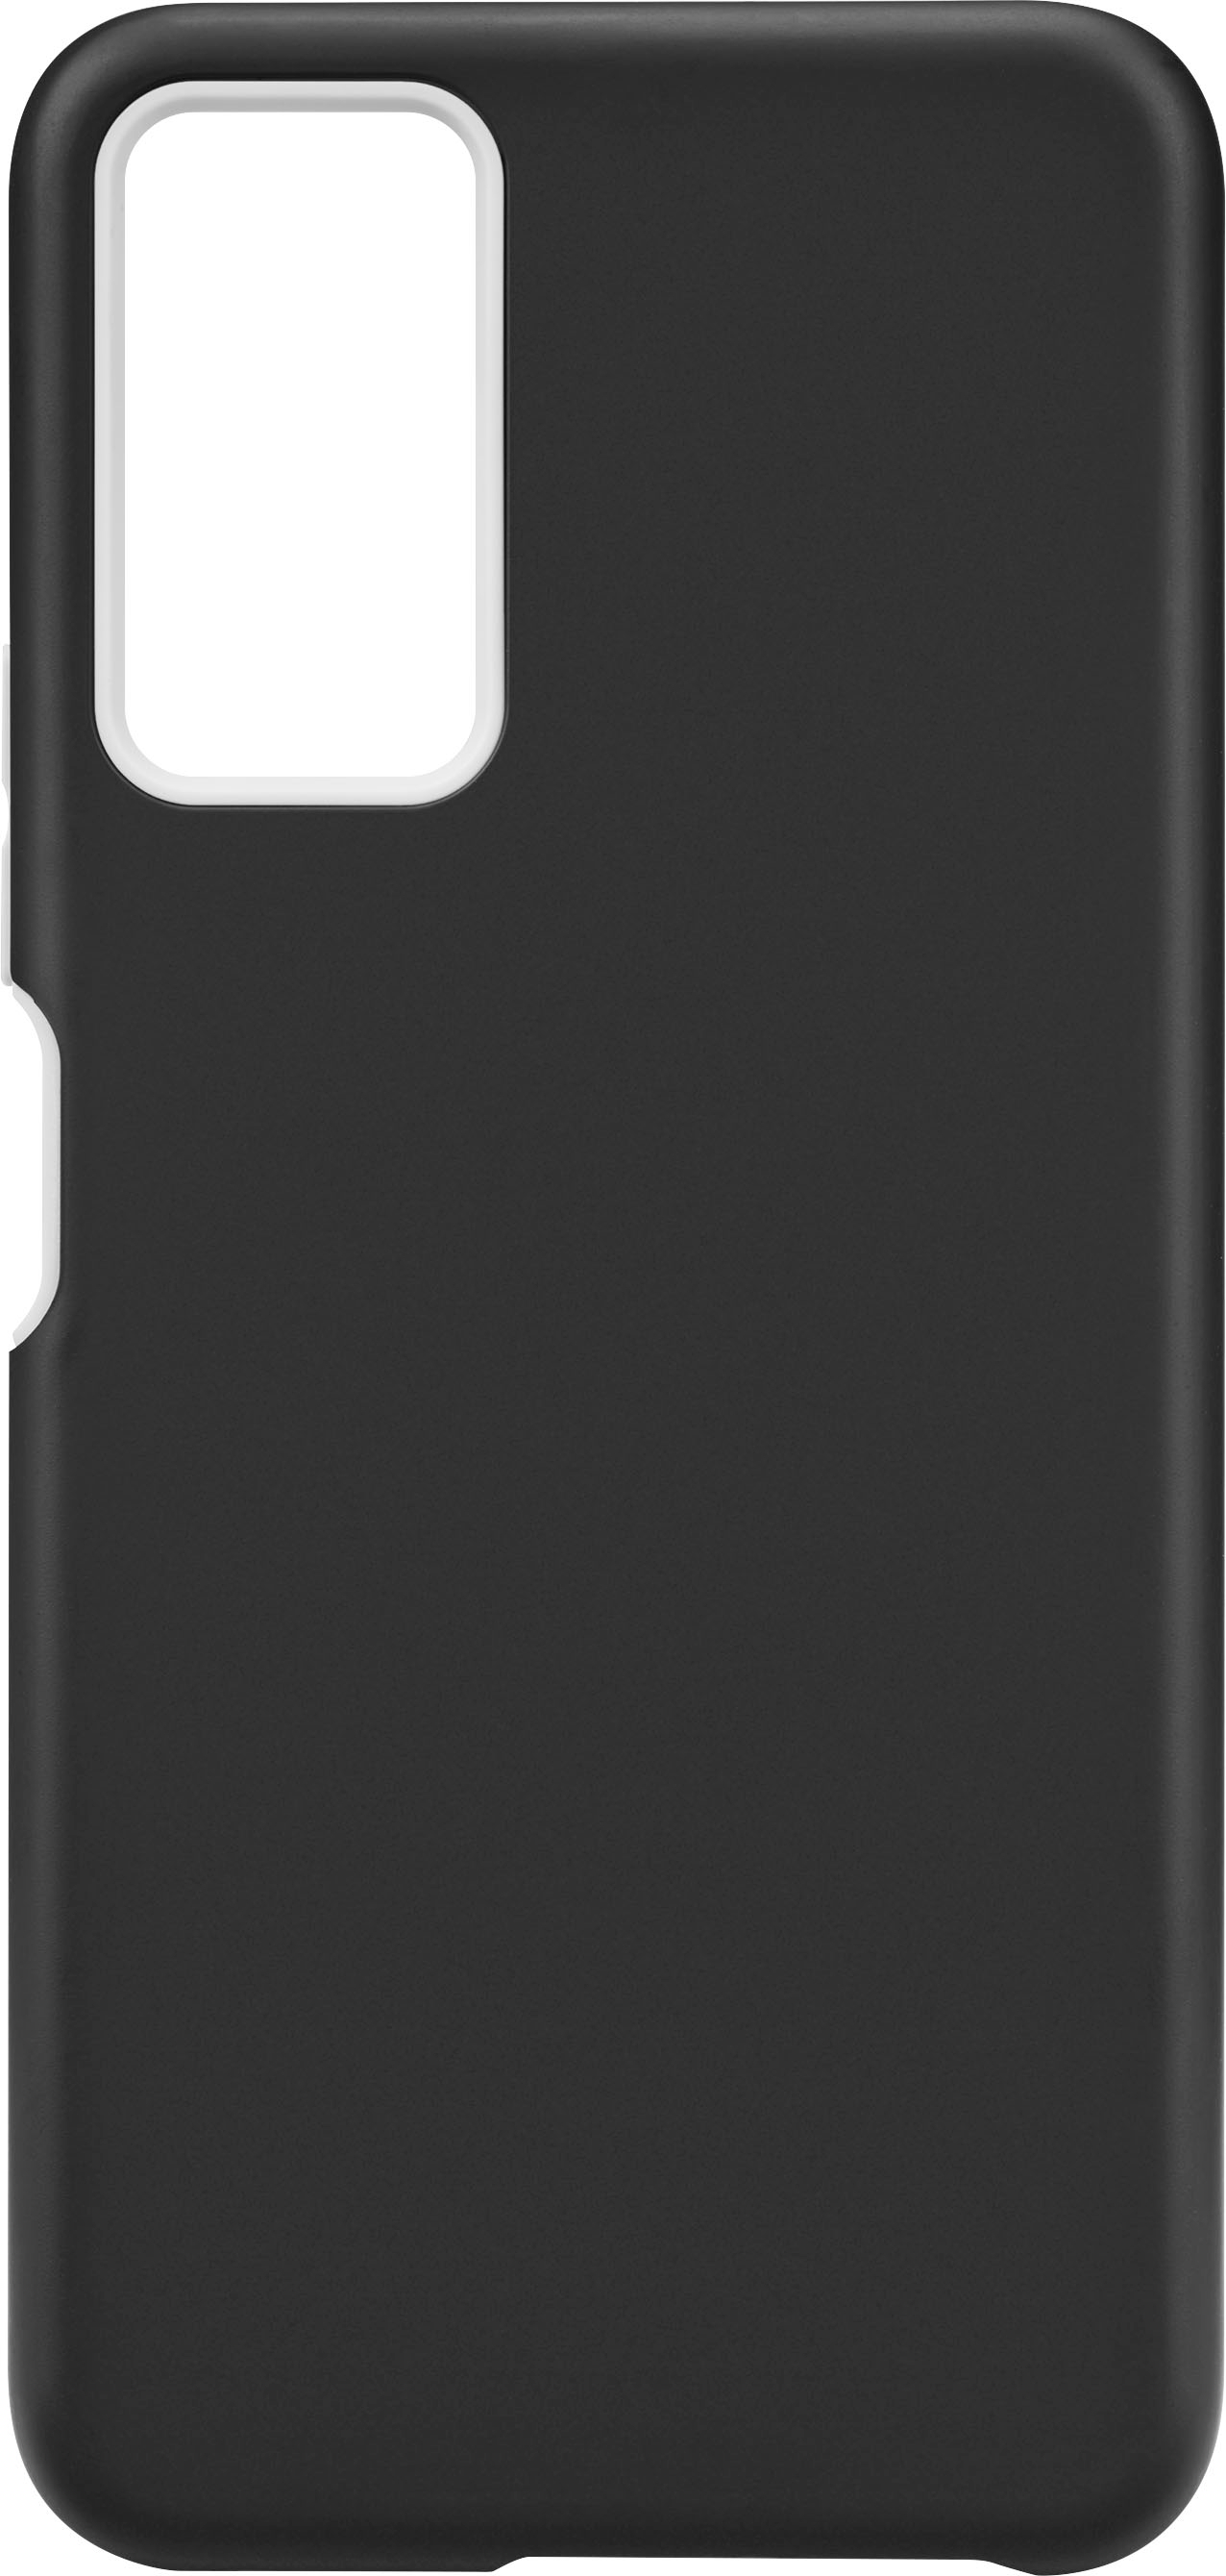 Lively™ Dual-Layer Hard Shell Case for Jitterbug Smart3 Black LV-SMRTDLBK -  Best Buy